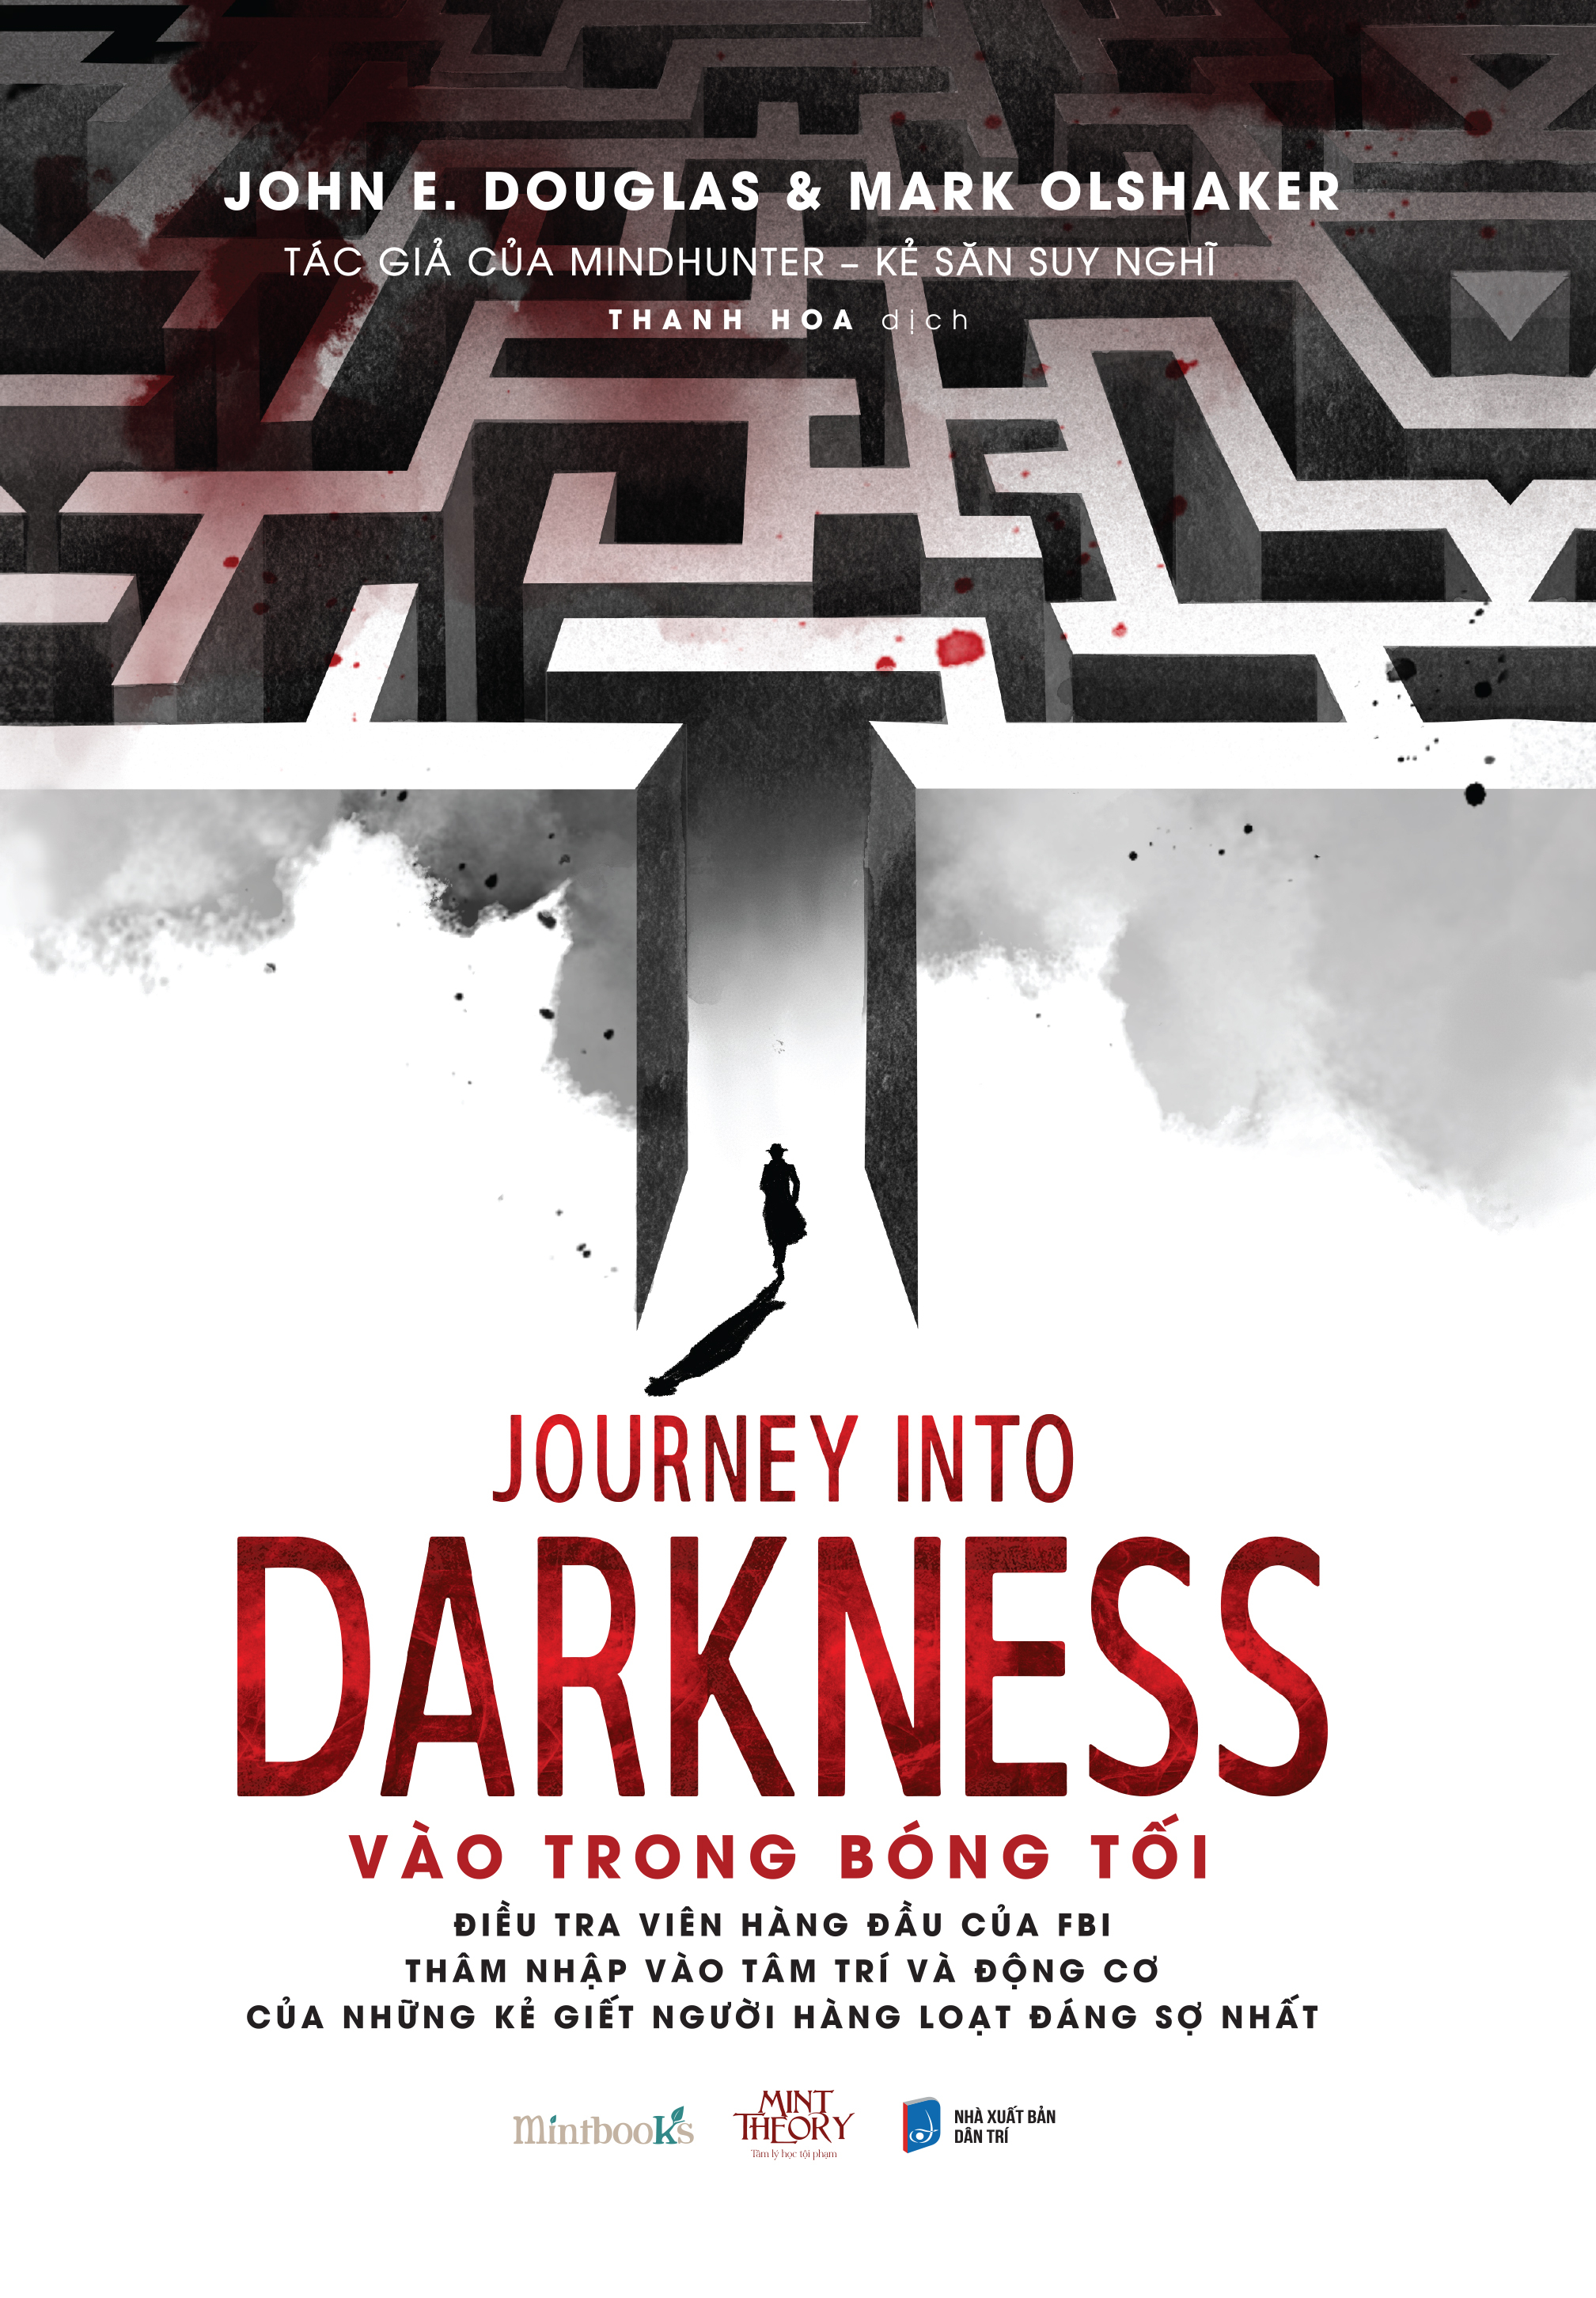 Journey Into Darkness - Vào Trong Bóng Tối PDF